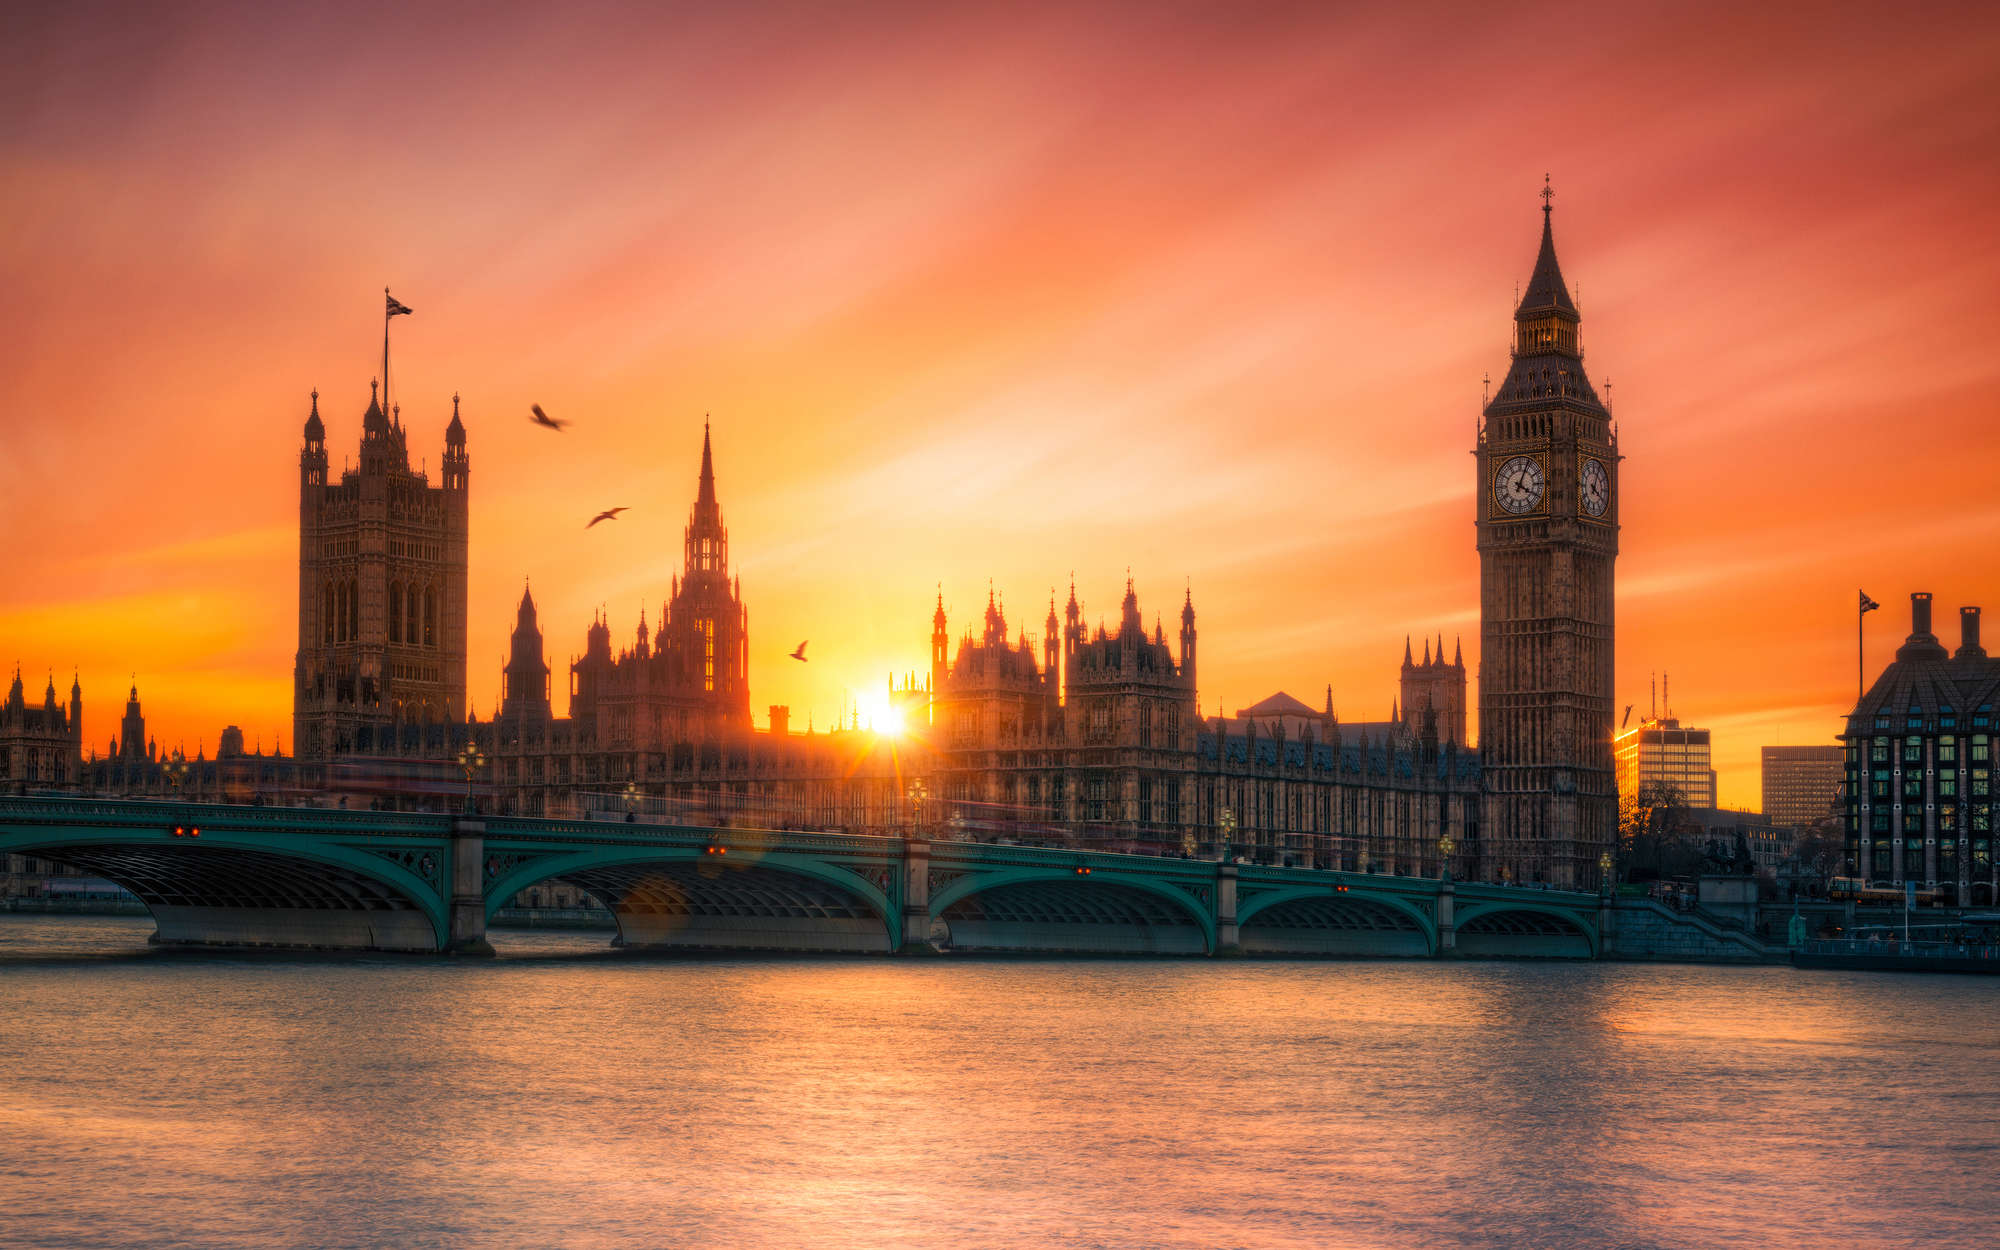             Fototapete London Skyline im Sonnenuntergang – Perlmutt Glattvlies
        